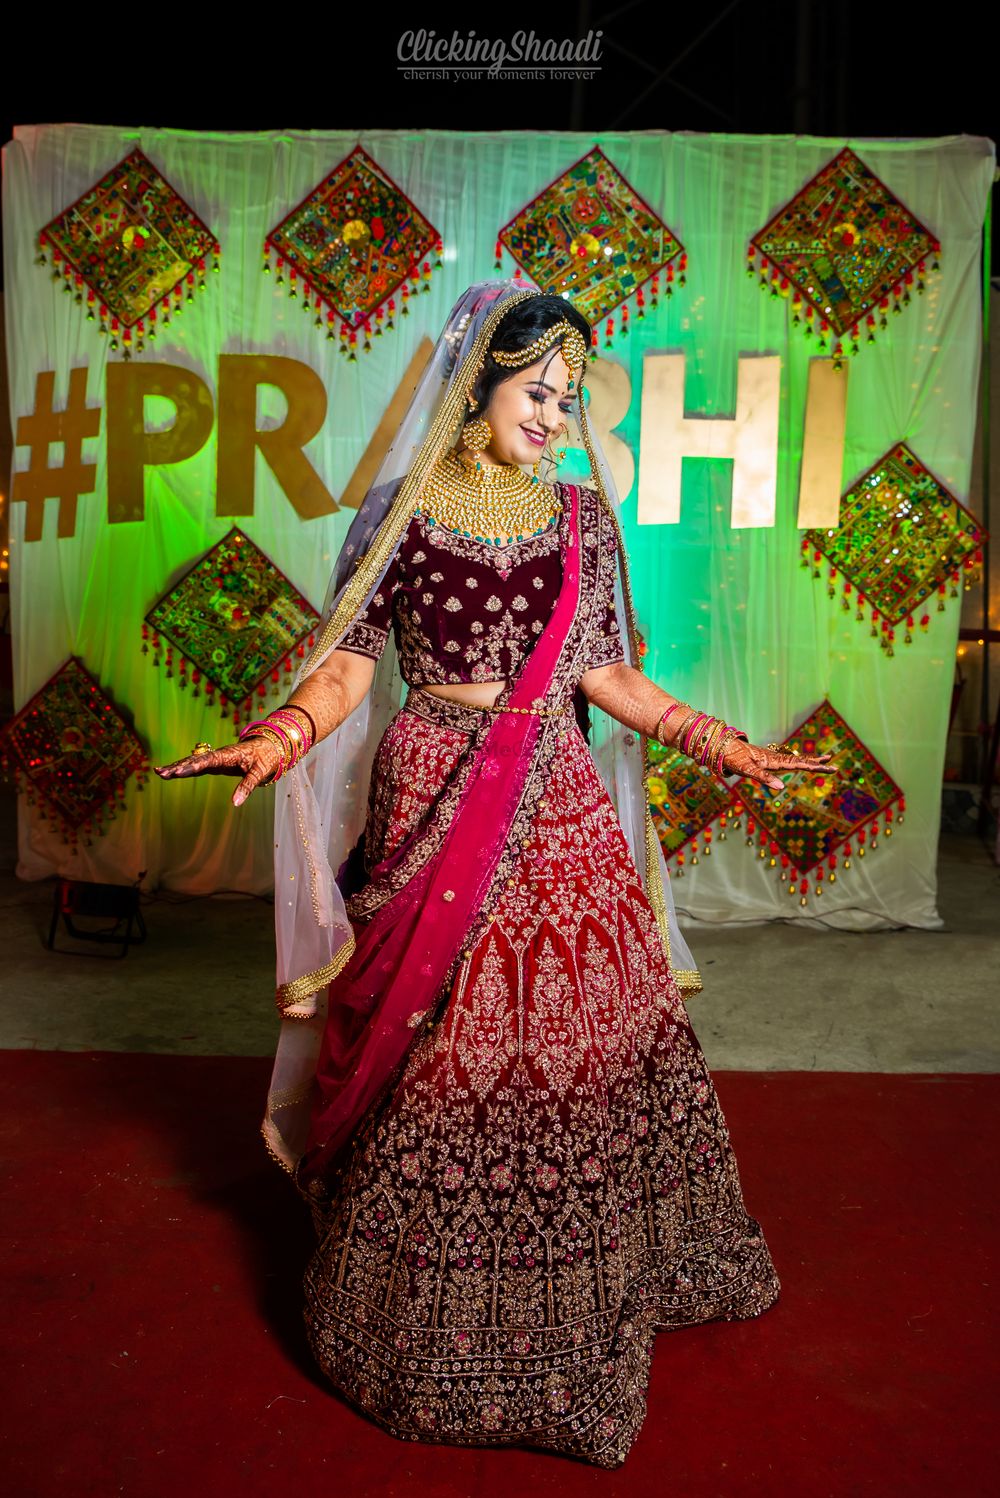 Photo From #PRABHI: Pragya x Abhinav - By Clicking Shaadi